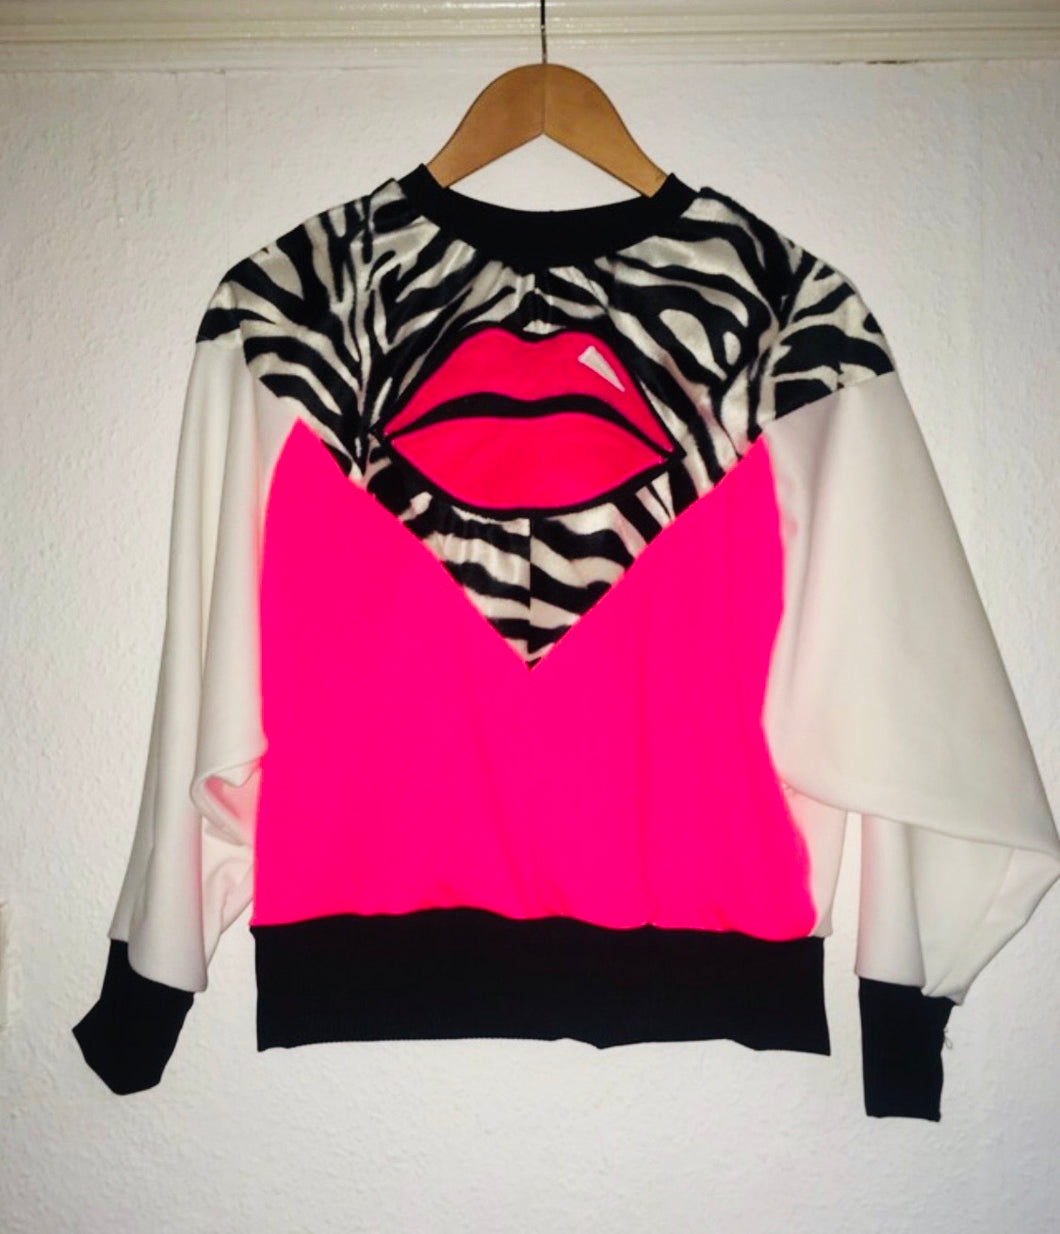 An Original Leroy Customised Neon Zebra Monster Kiss Batwing Sweatshirt